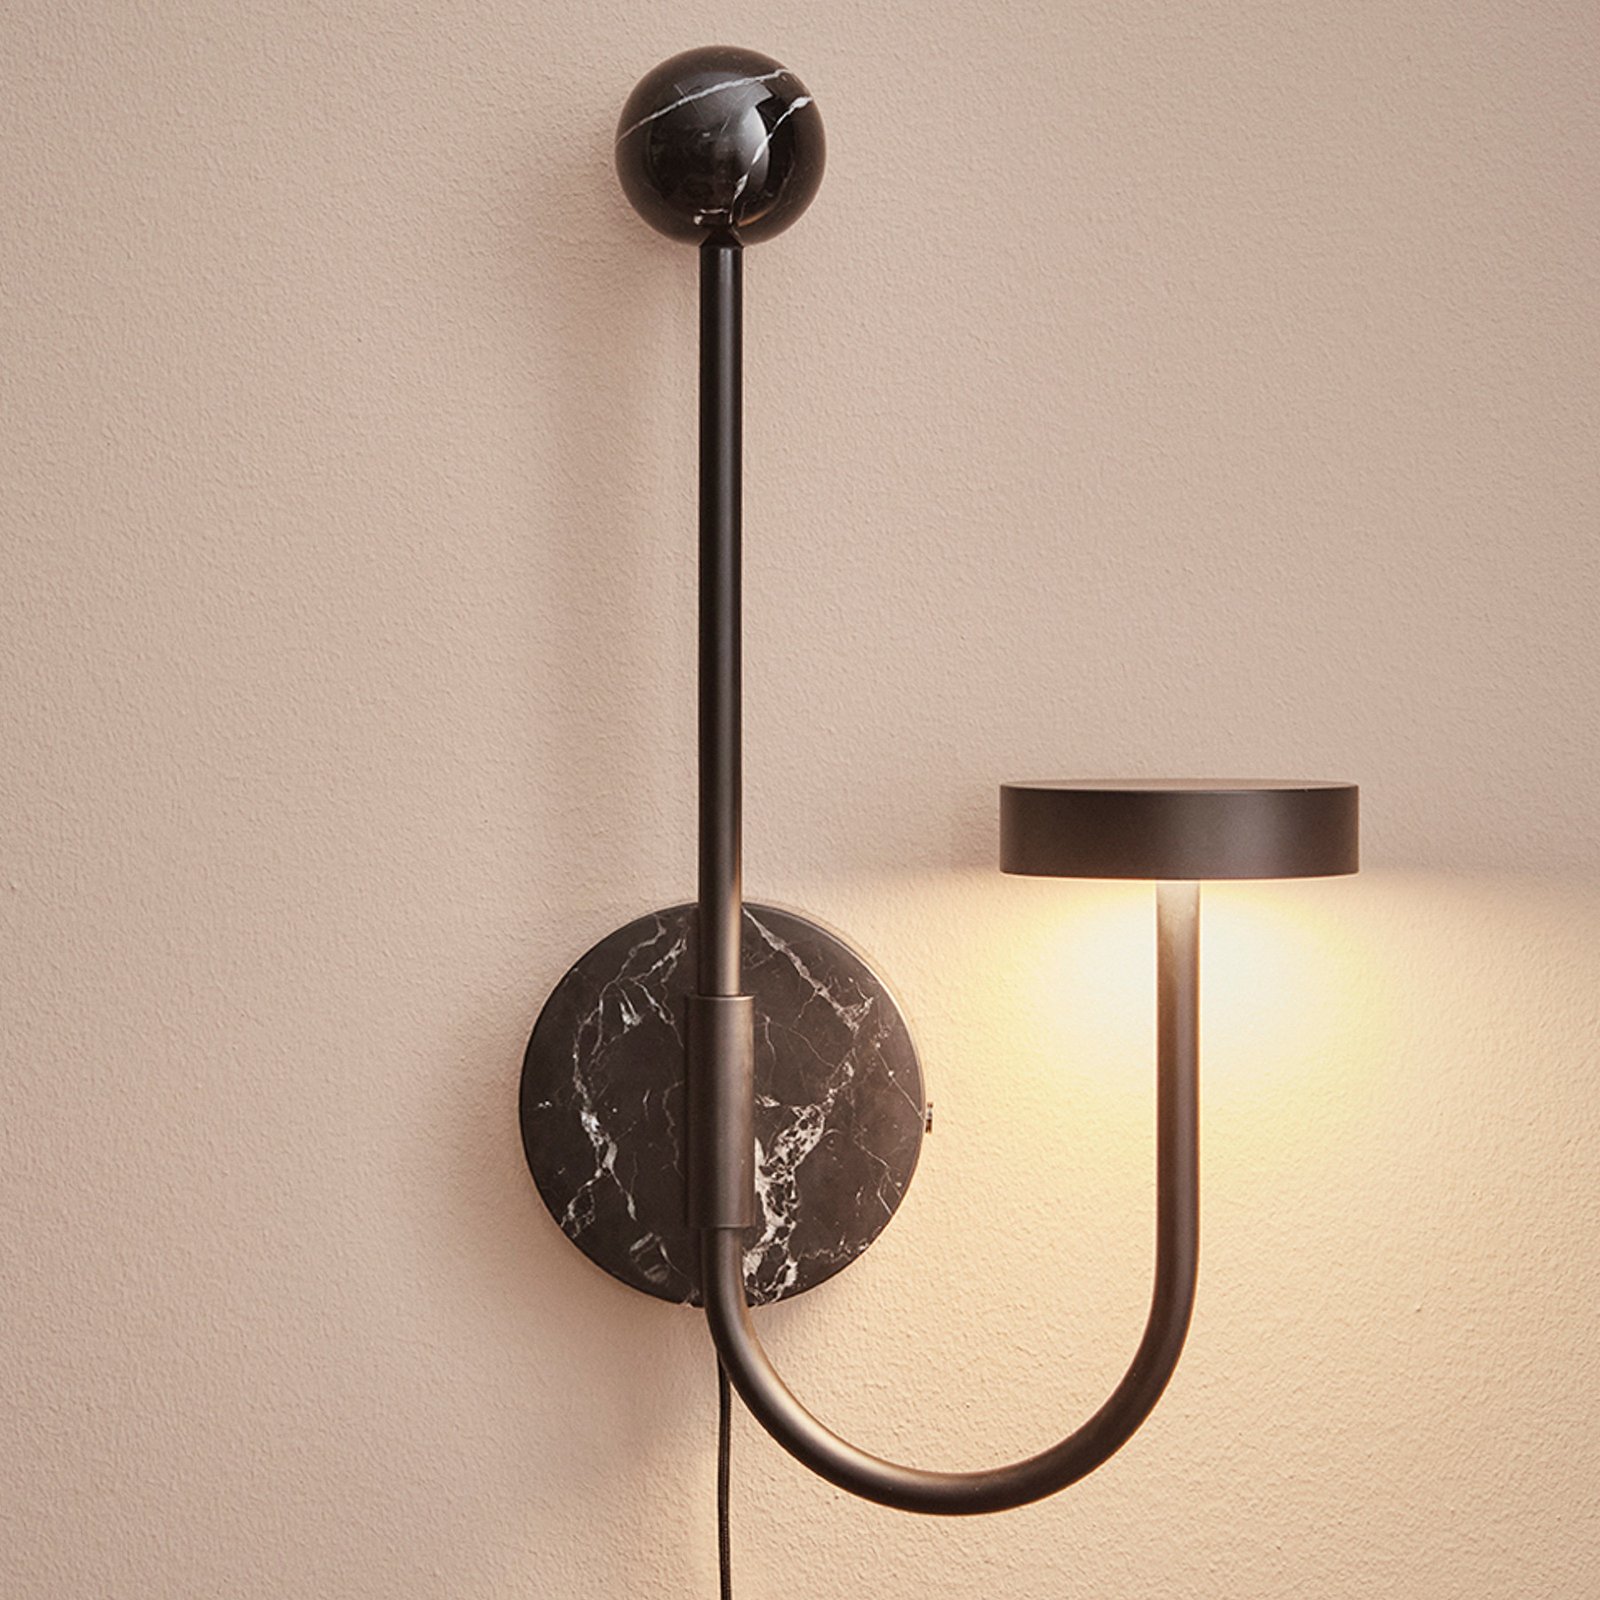 Nástenné svietidlo AYTM Grasil LED, čierne, mramor, zástrčka, 54 cm